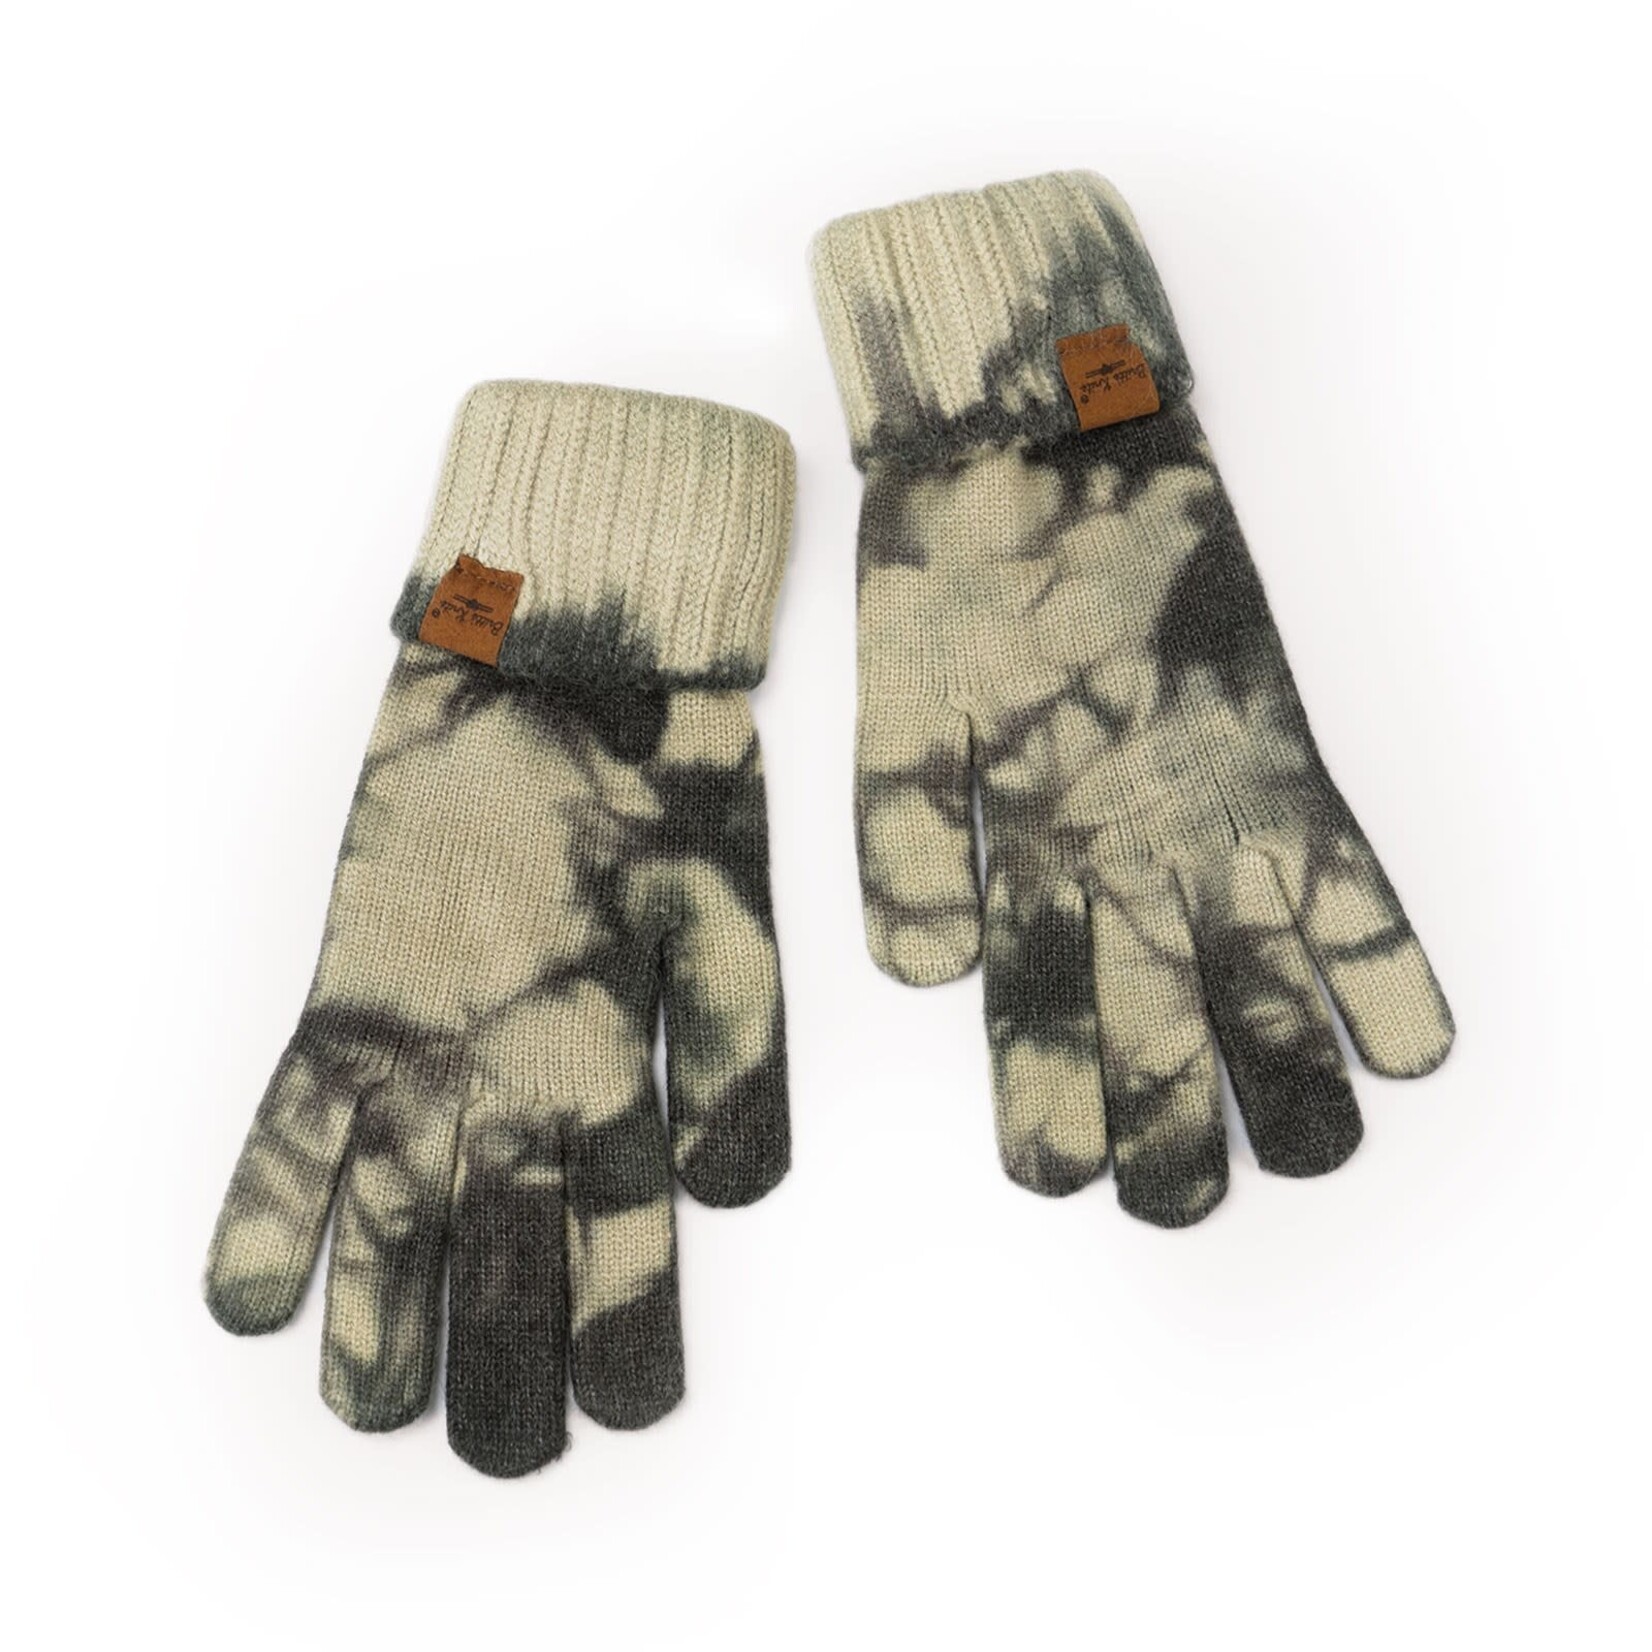 Britt's Knits Britt's Knits Mantra Gloves